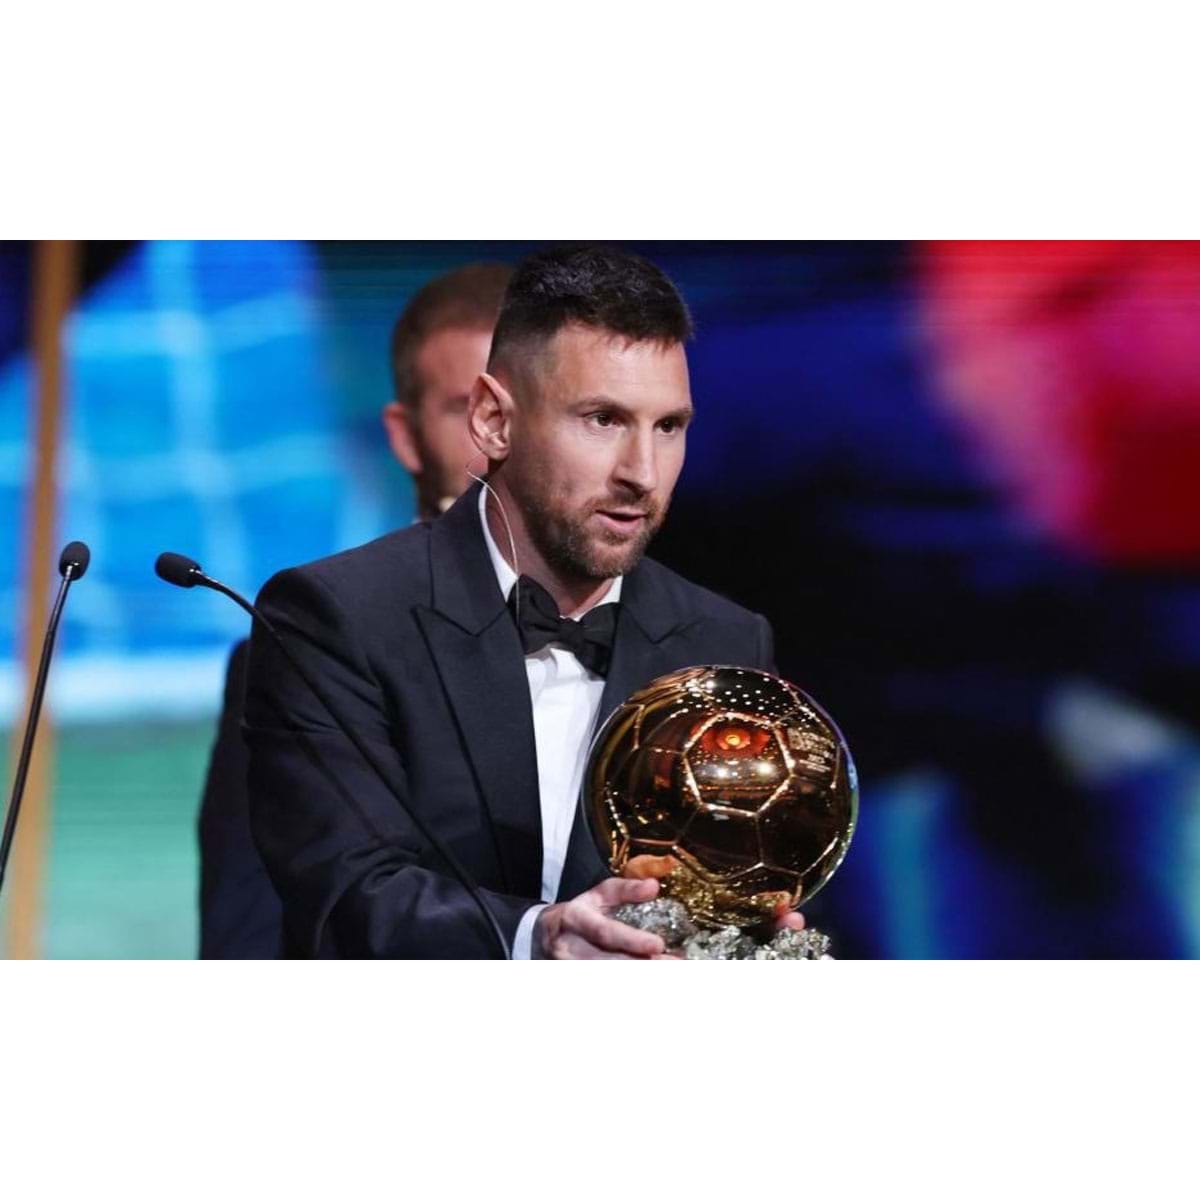 Jornalista espanhol critica Bola de Ouro de Messi e Cristiano Ronaldo  'ri-se' - Internacional - Jornal Record